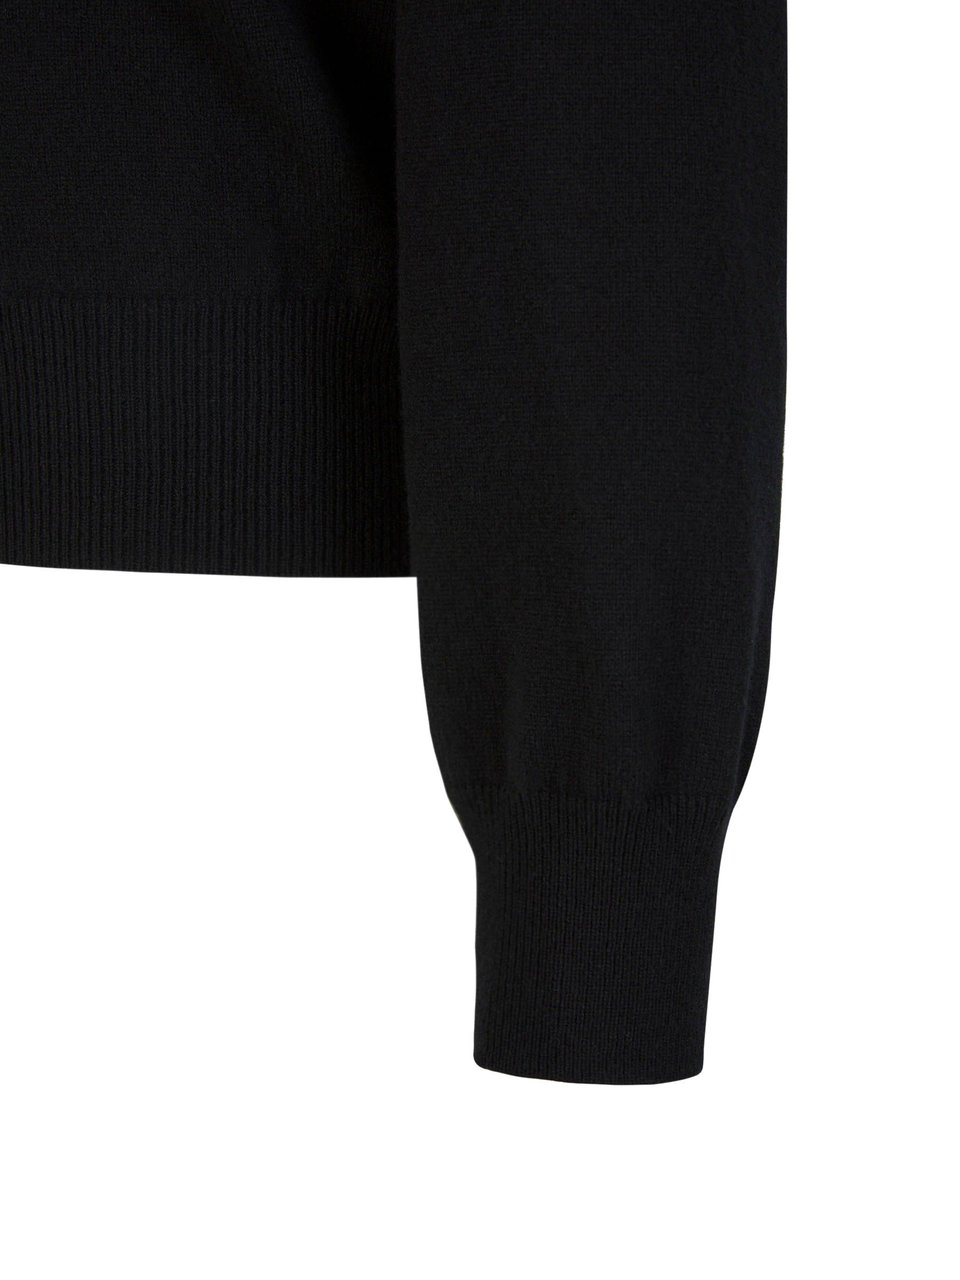 Givenchy Logo Wool Sweater Zwart